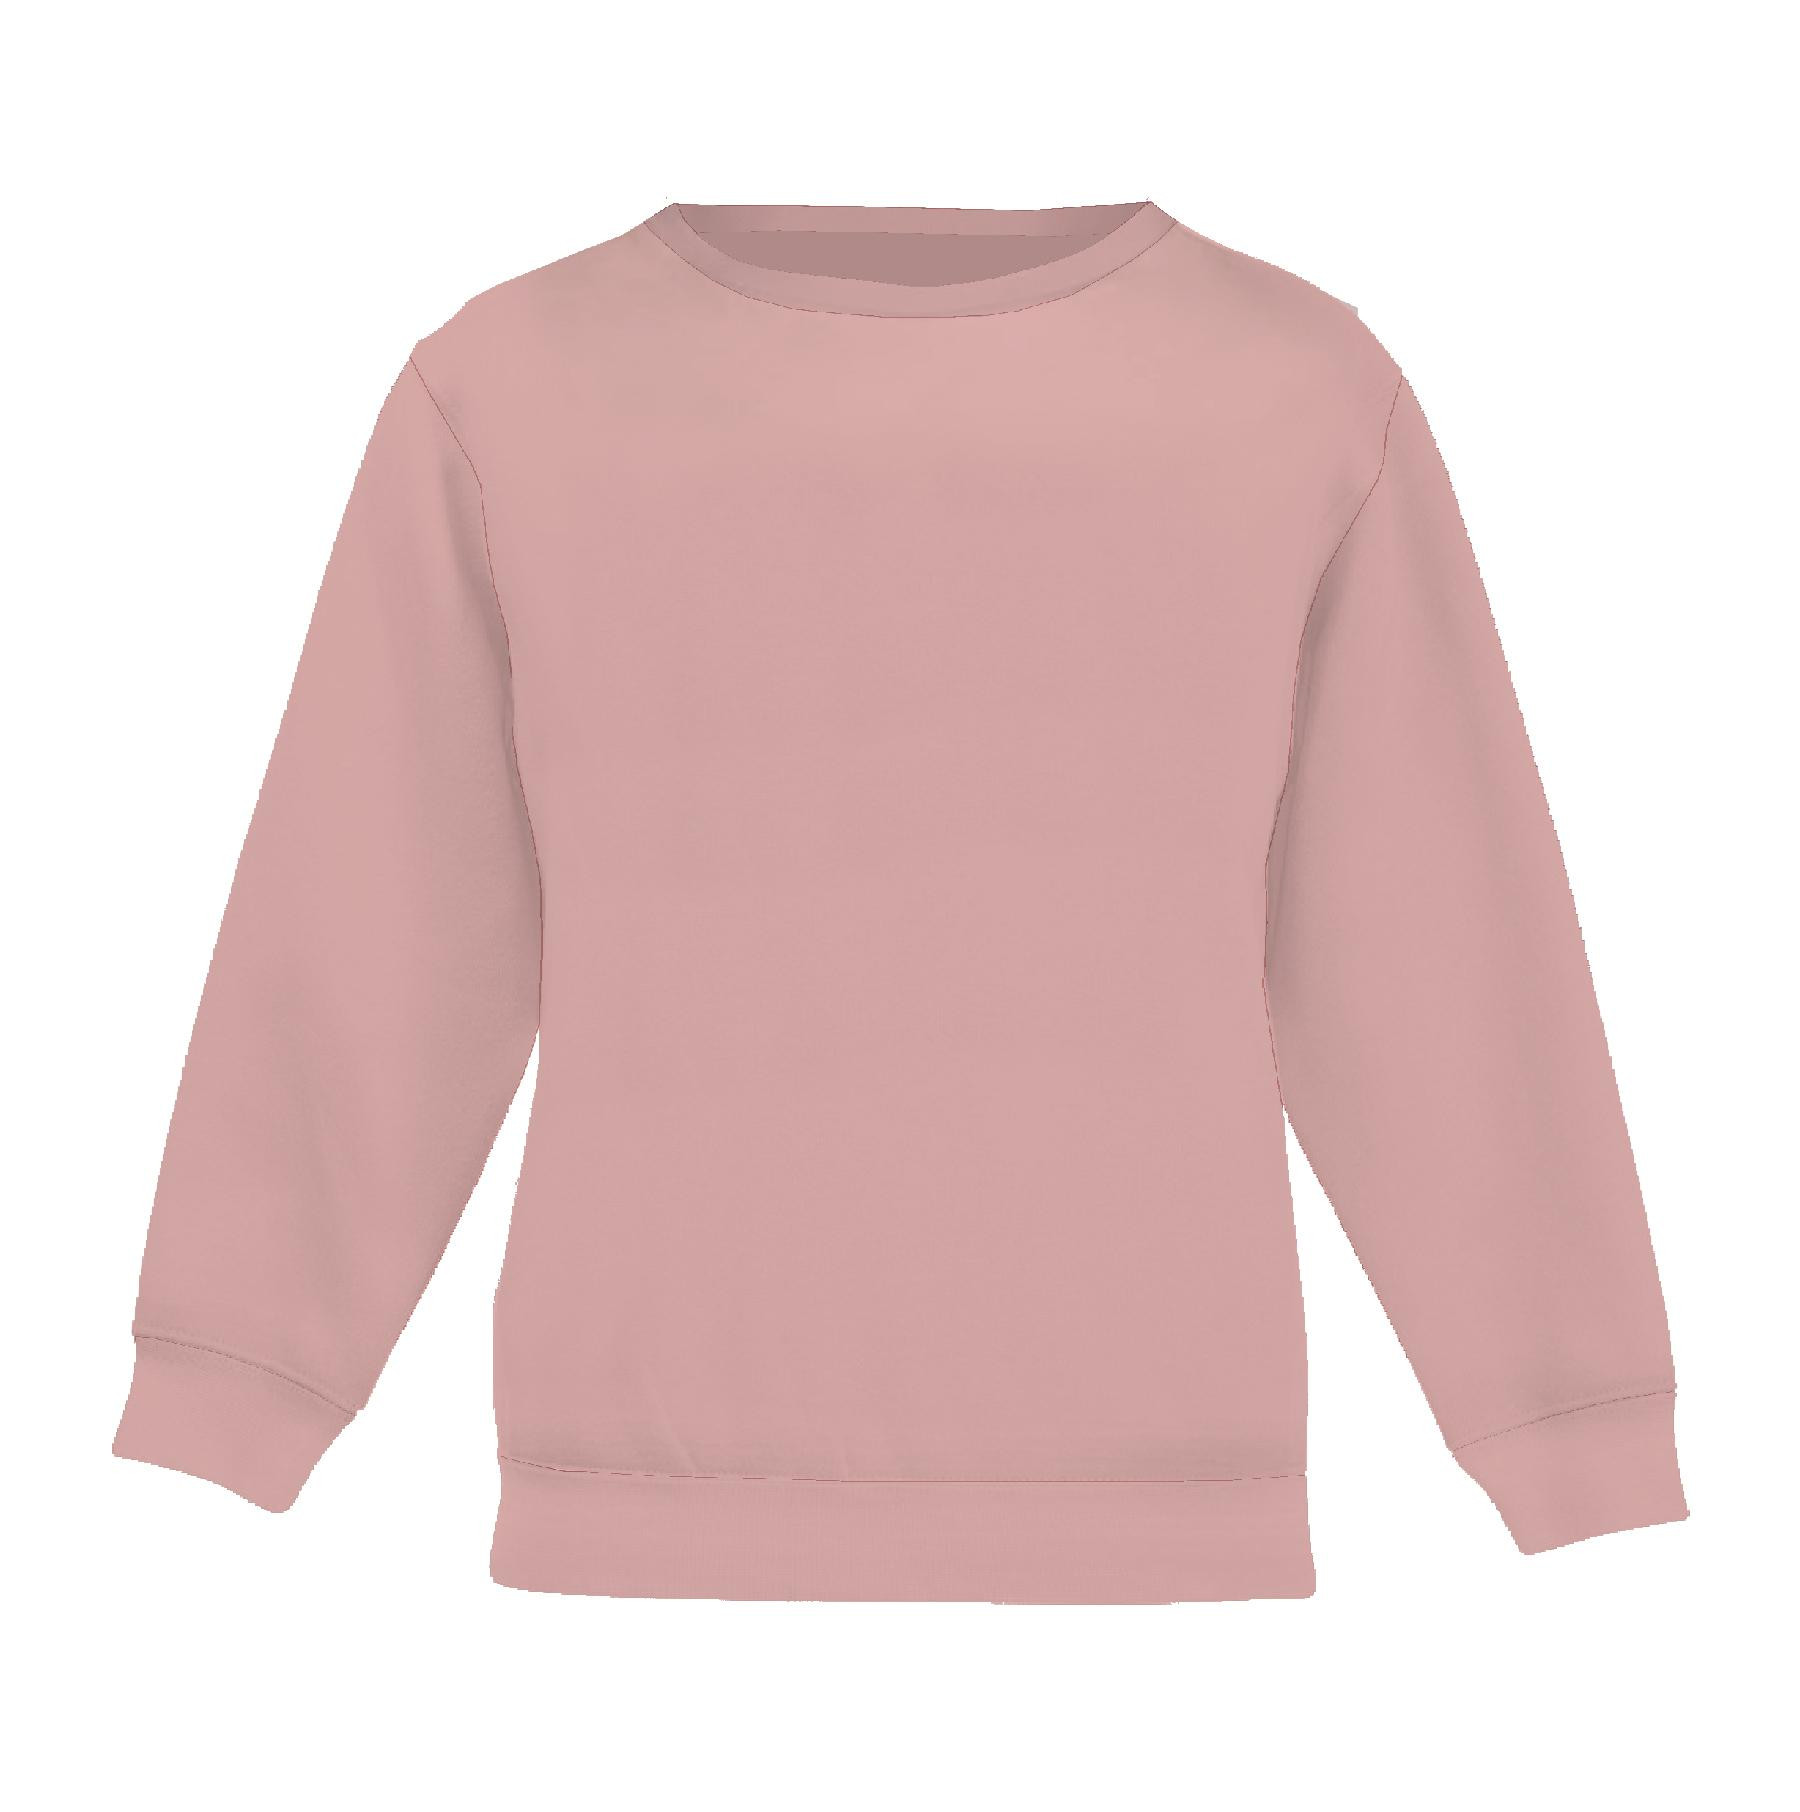 Kinder-Sweatshirts (NOE) - B-05 ROSE QUARTZ - Sommersweat